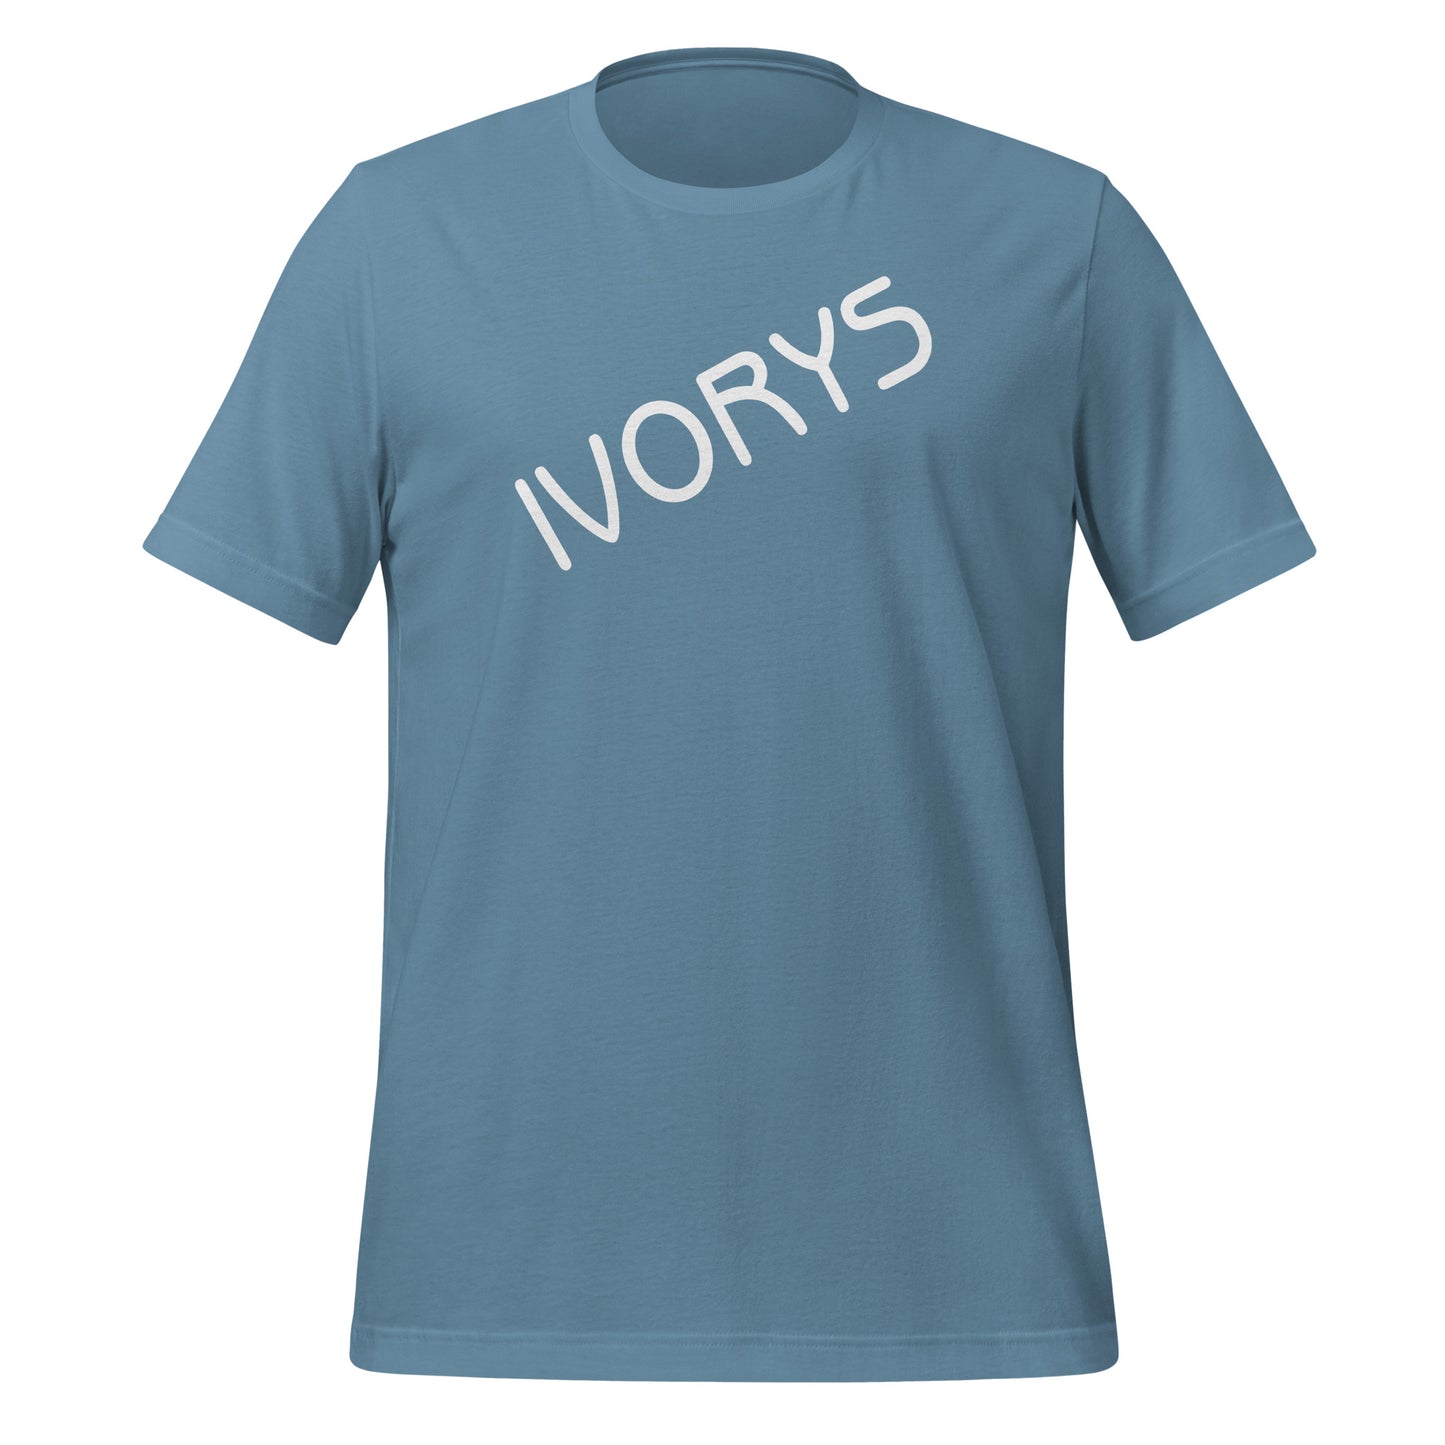 Ivory's unisex printed t-shirt